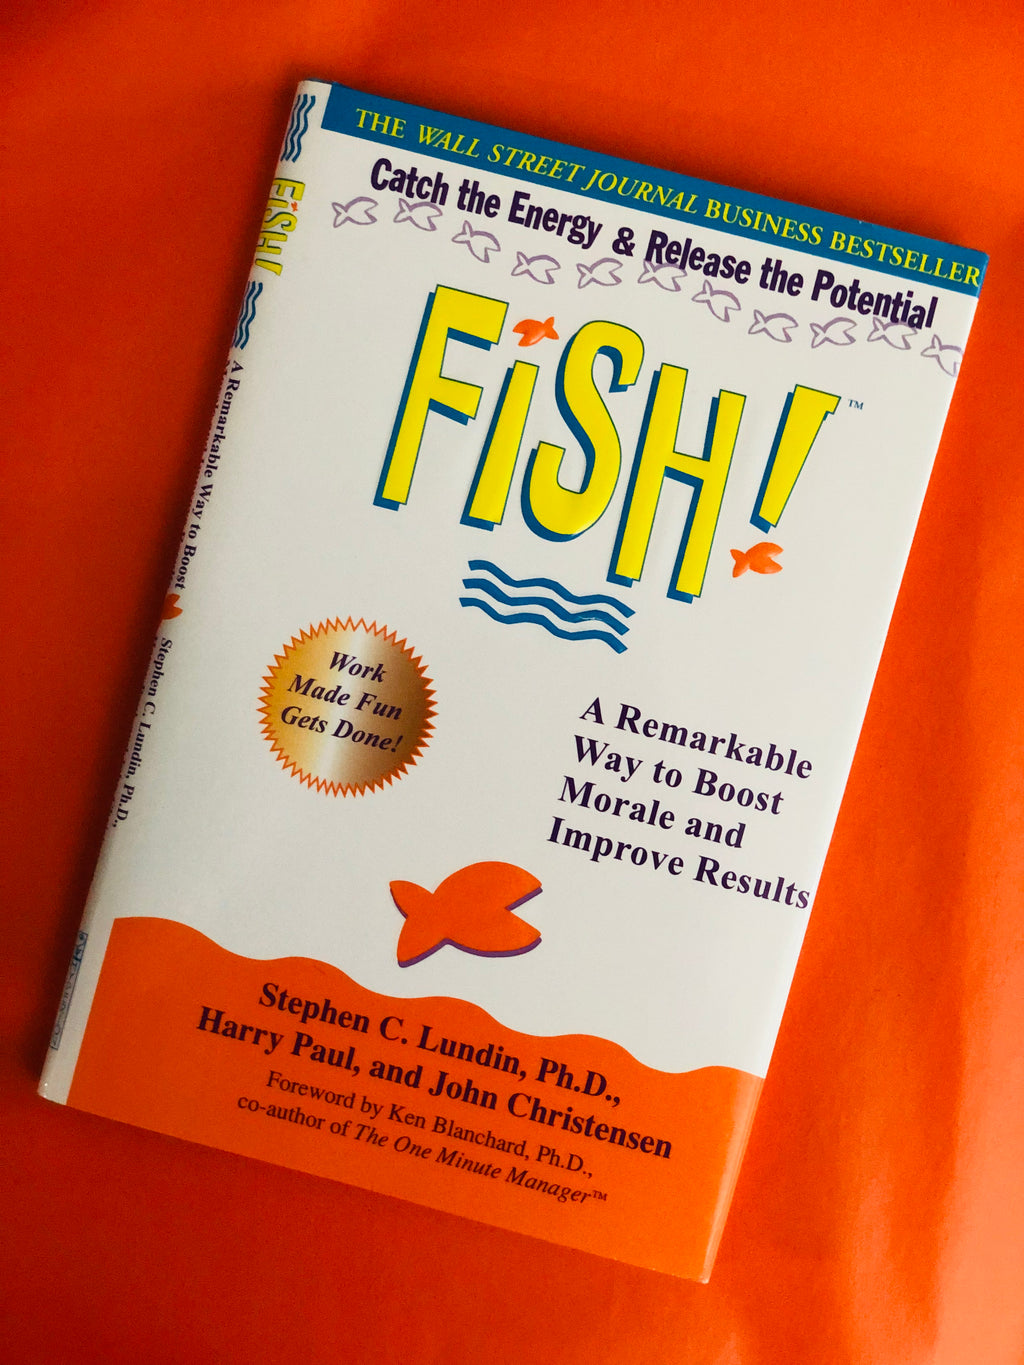 Fish!- By Stephen C. Lundin, Ph.D., Harry Paul and John Christensen